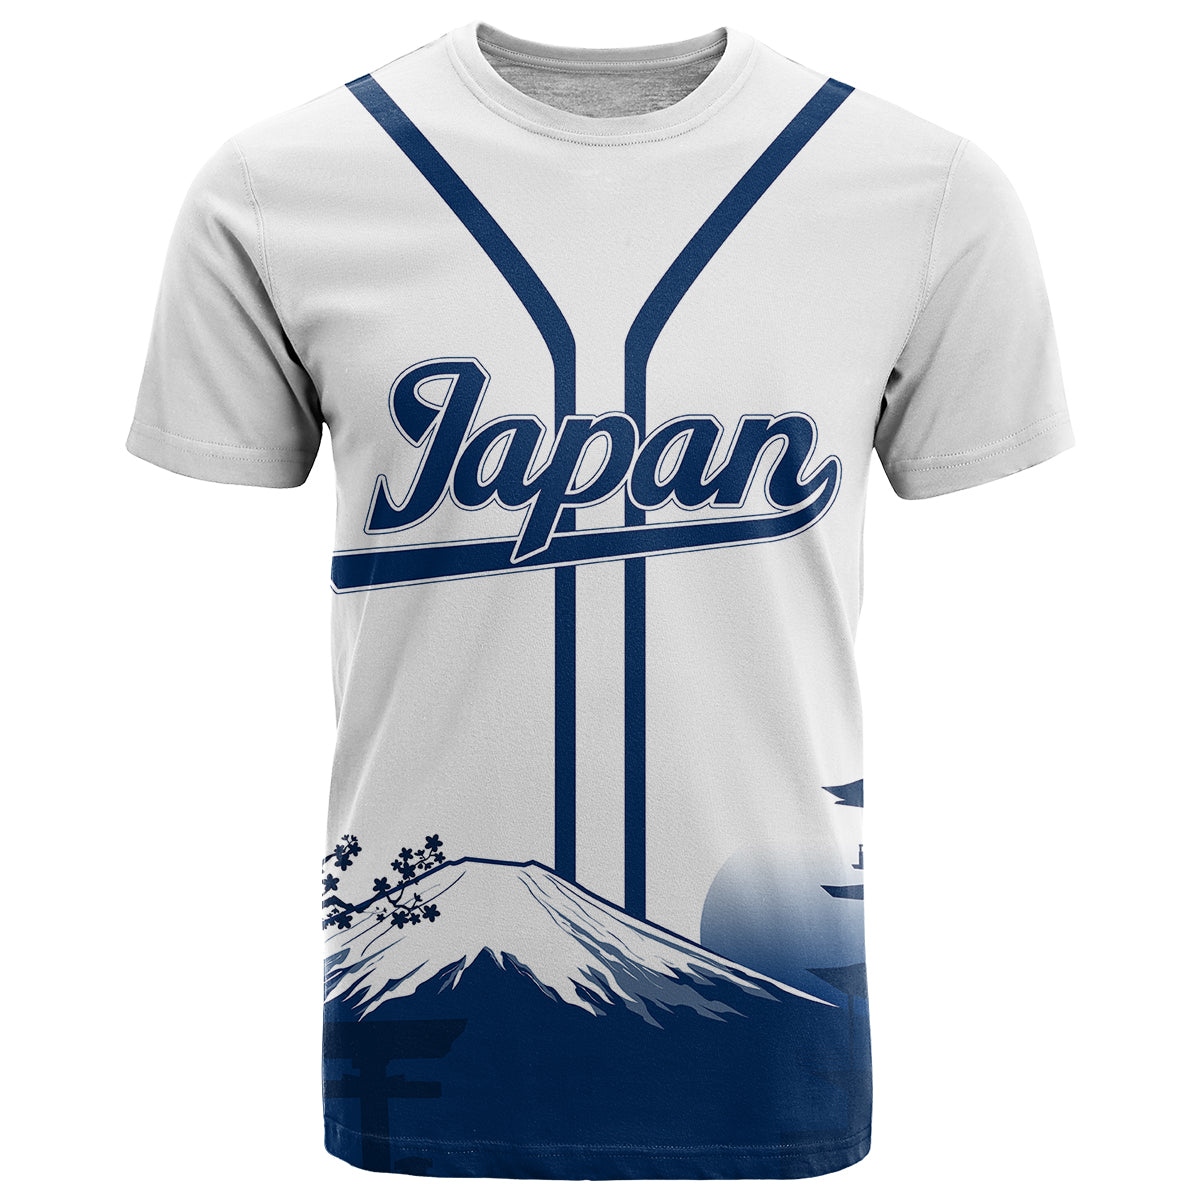 japan-baseball-champions-fuji-mountain-landscape-art-t-shirt